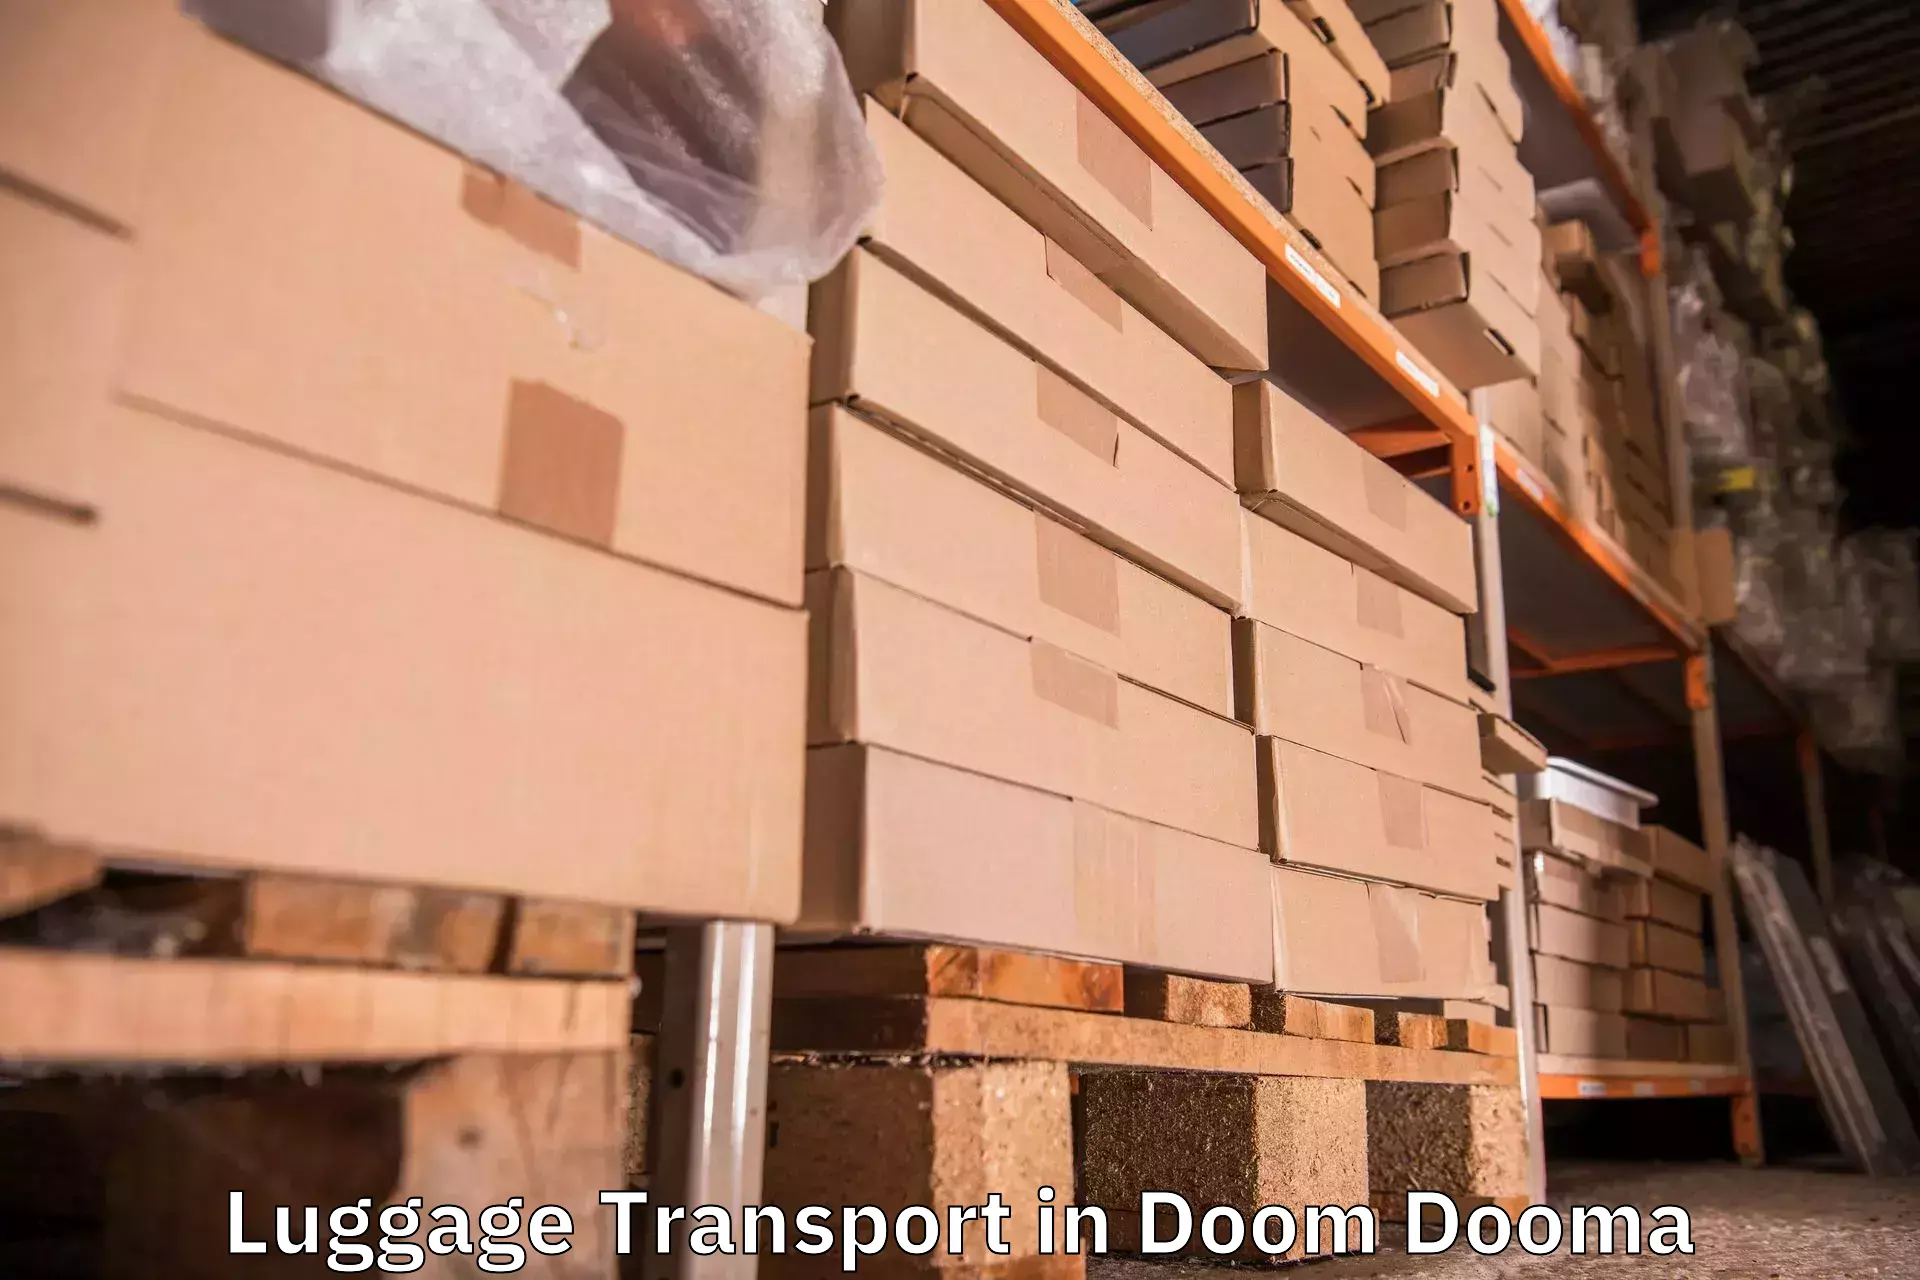 Timely baggage transport in Doom Dooma